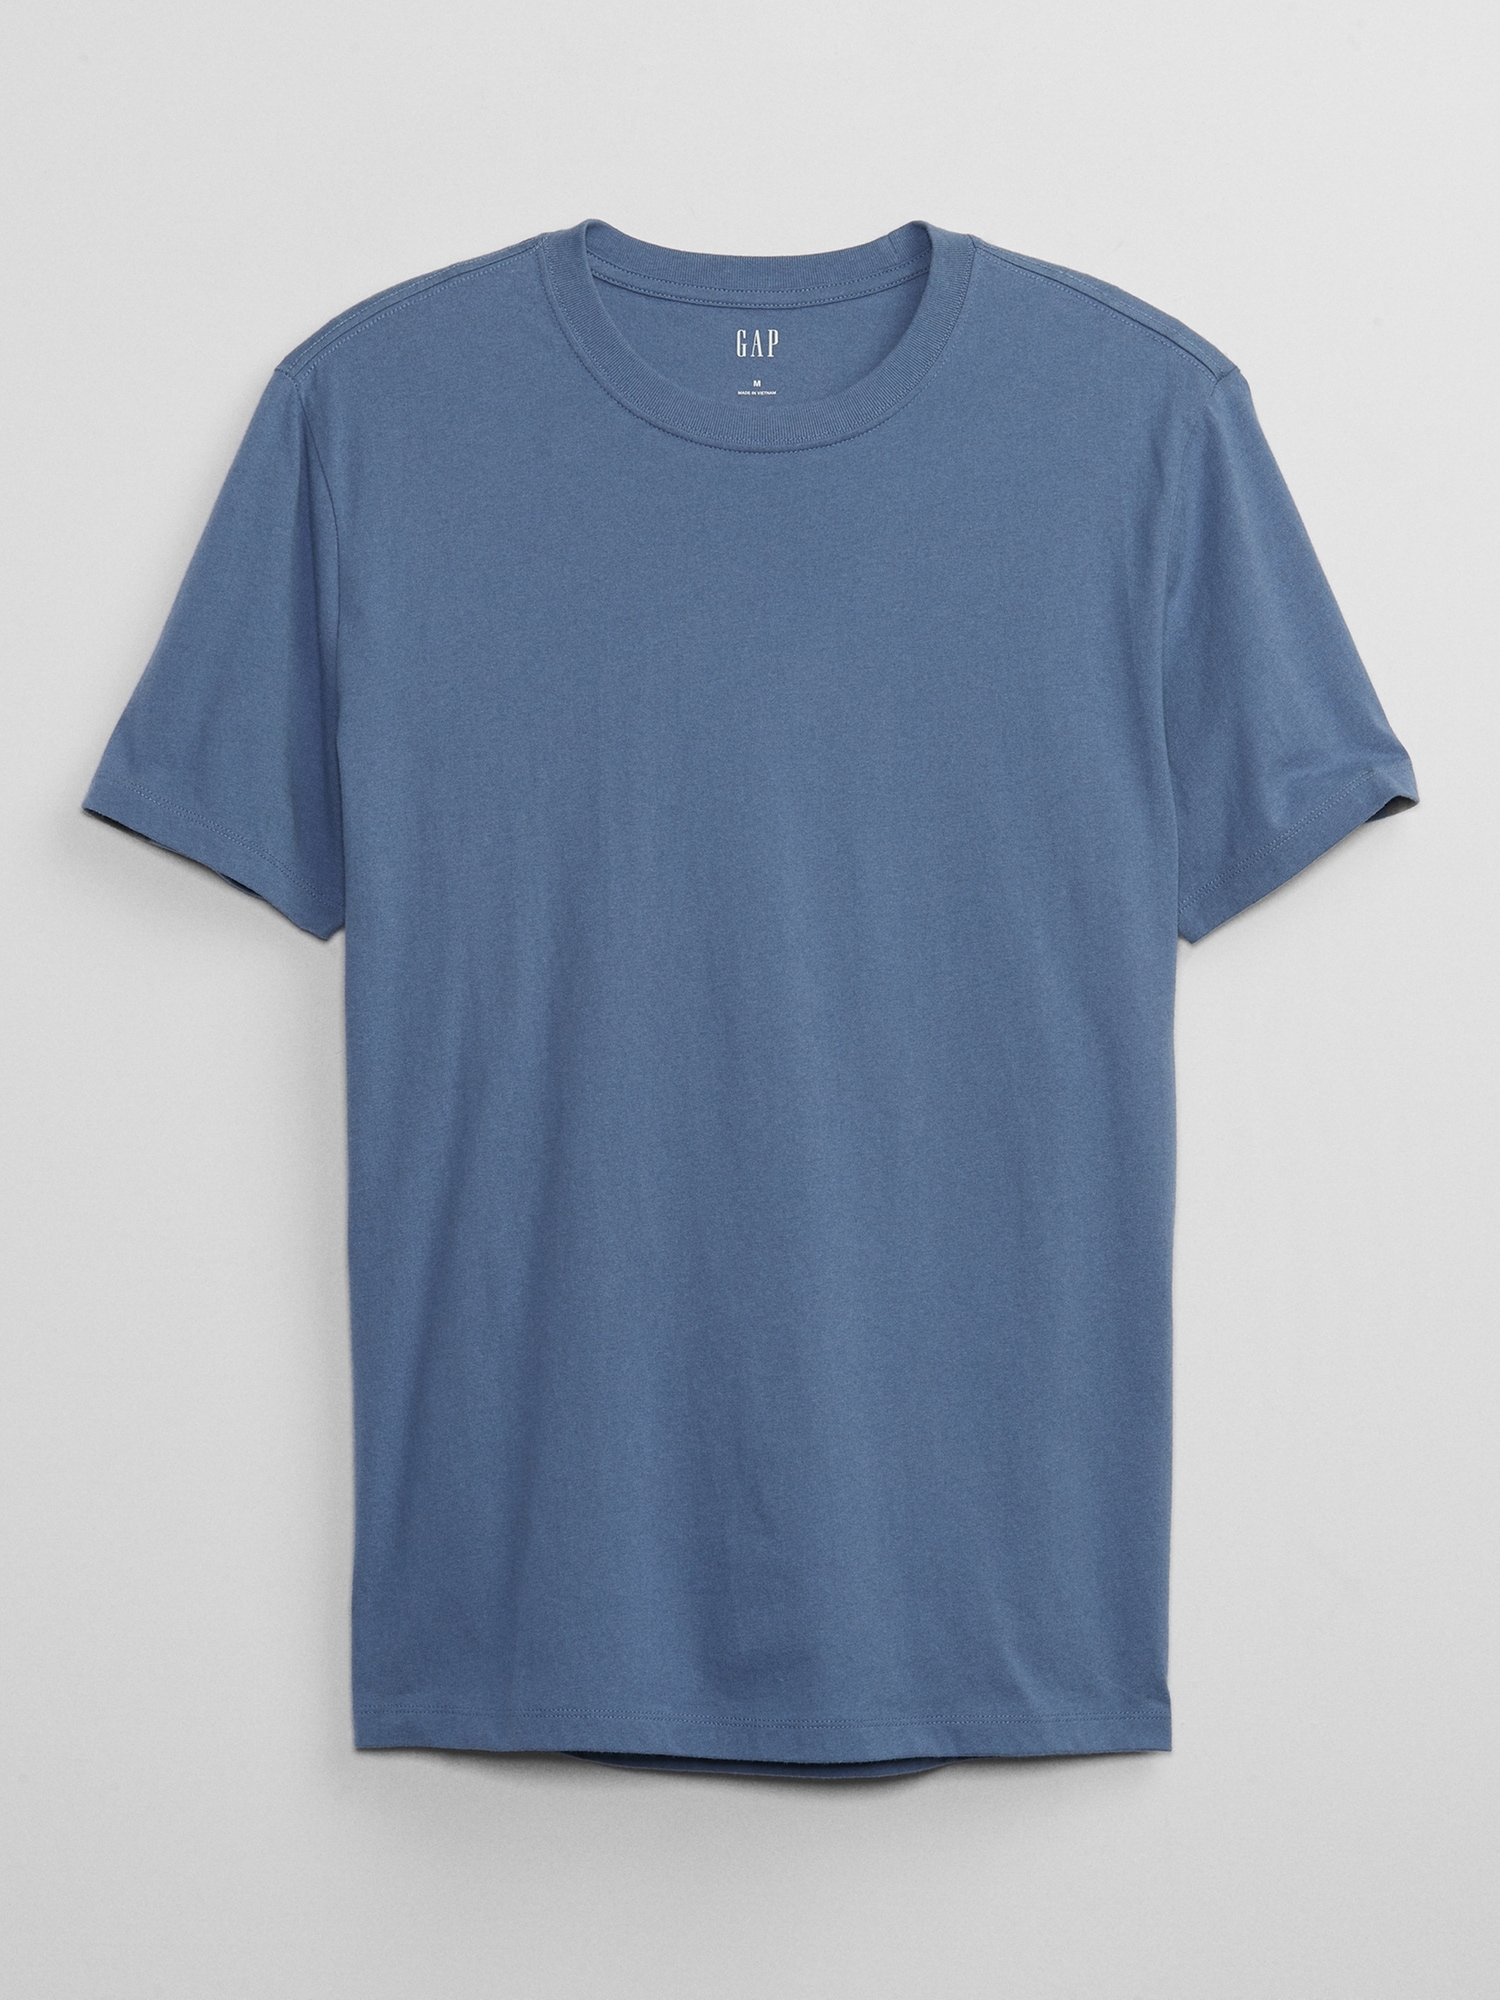 Gap Factory Men's Everyday Soft Crewneck T-Shirt